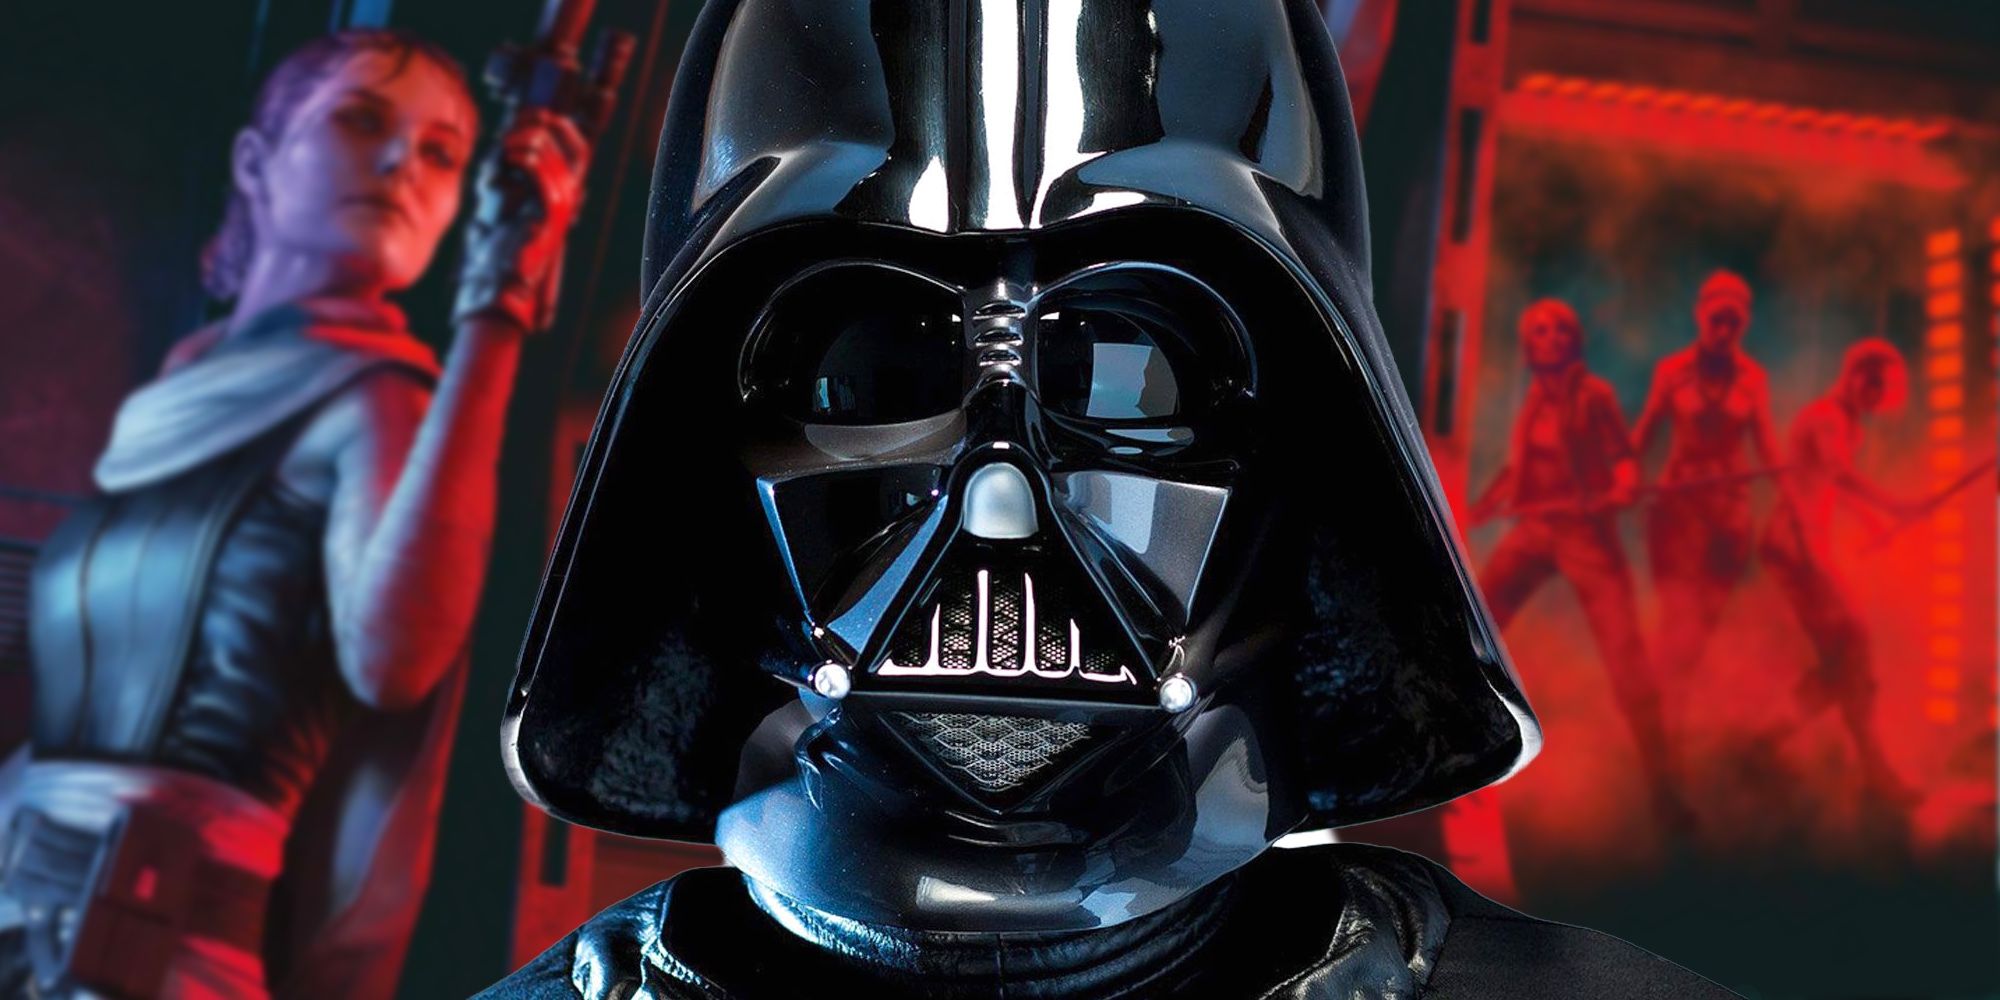 Darth Vader and Sabé in new Star Wars Comics